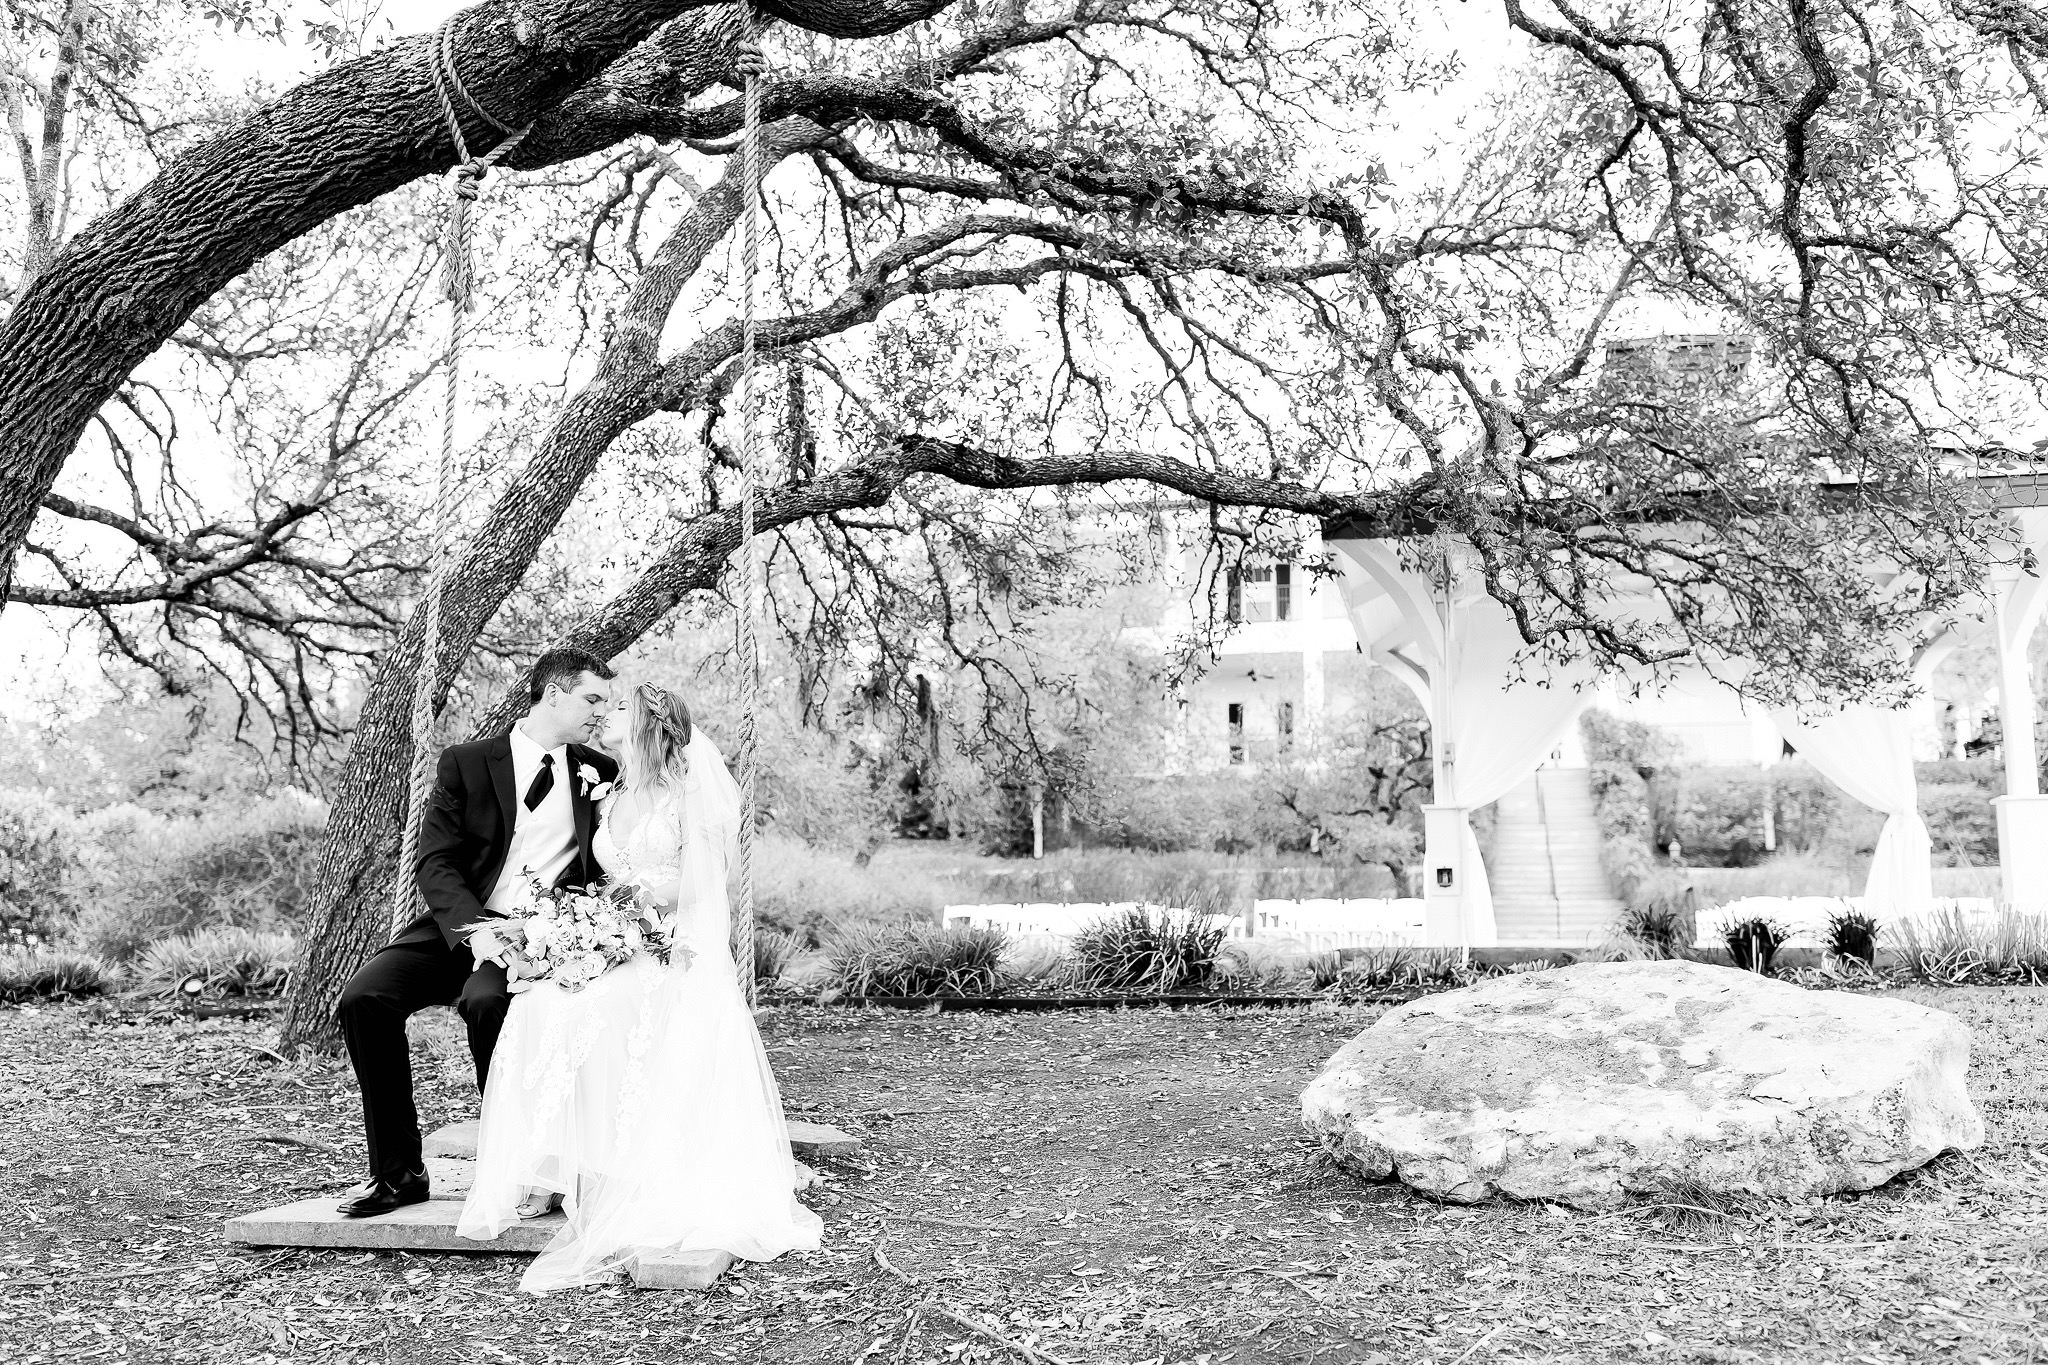 A Mauve and Champagne Wedding at Kendall Point in Boerne, TX by Dawn Elizabeth Studios, San Antonio Wedding Photographer